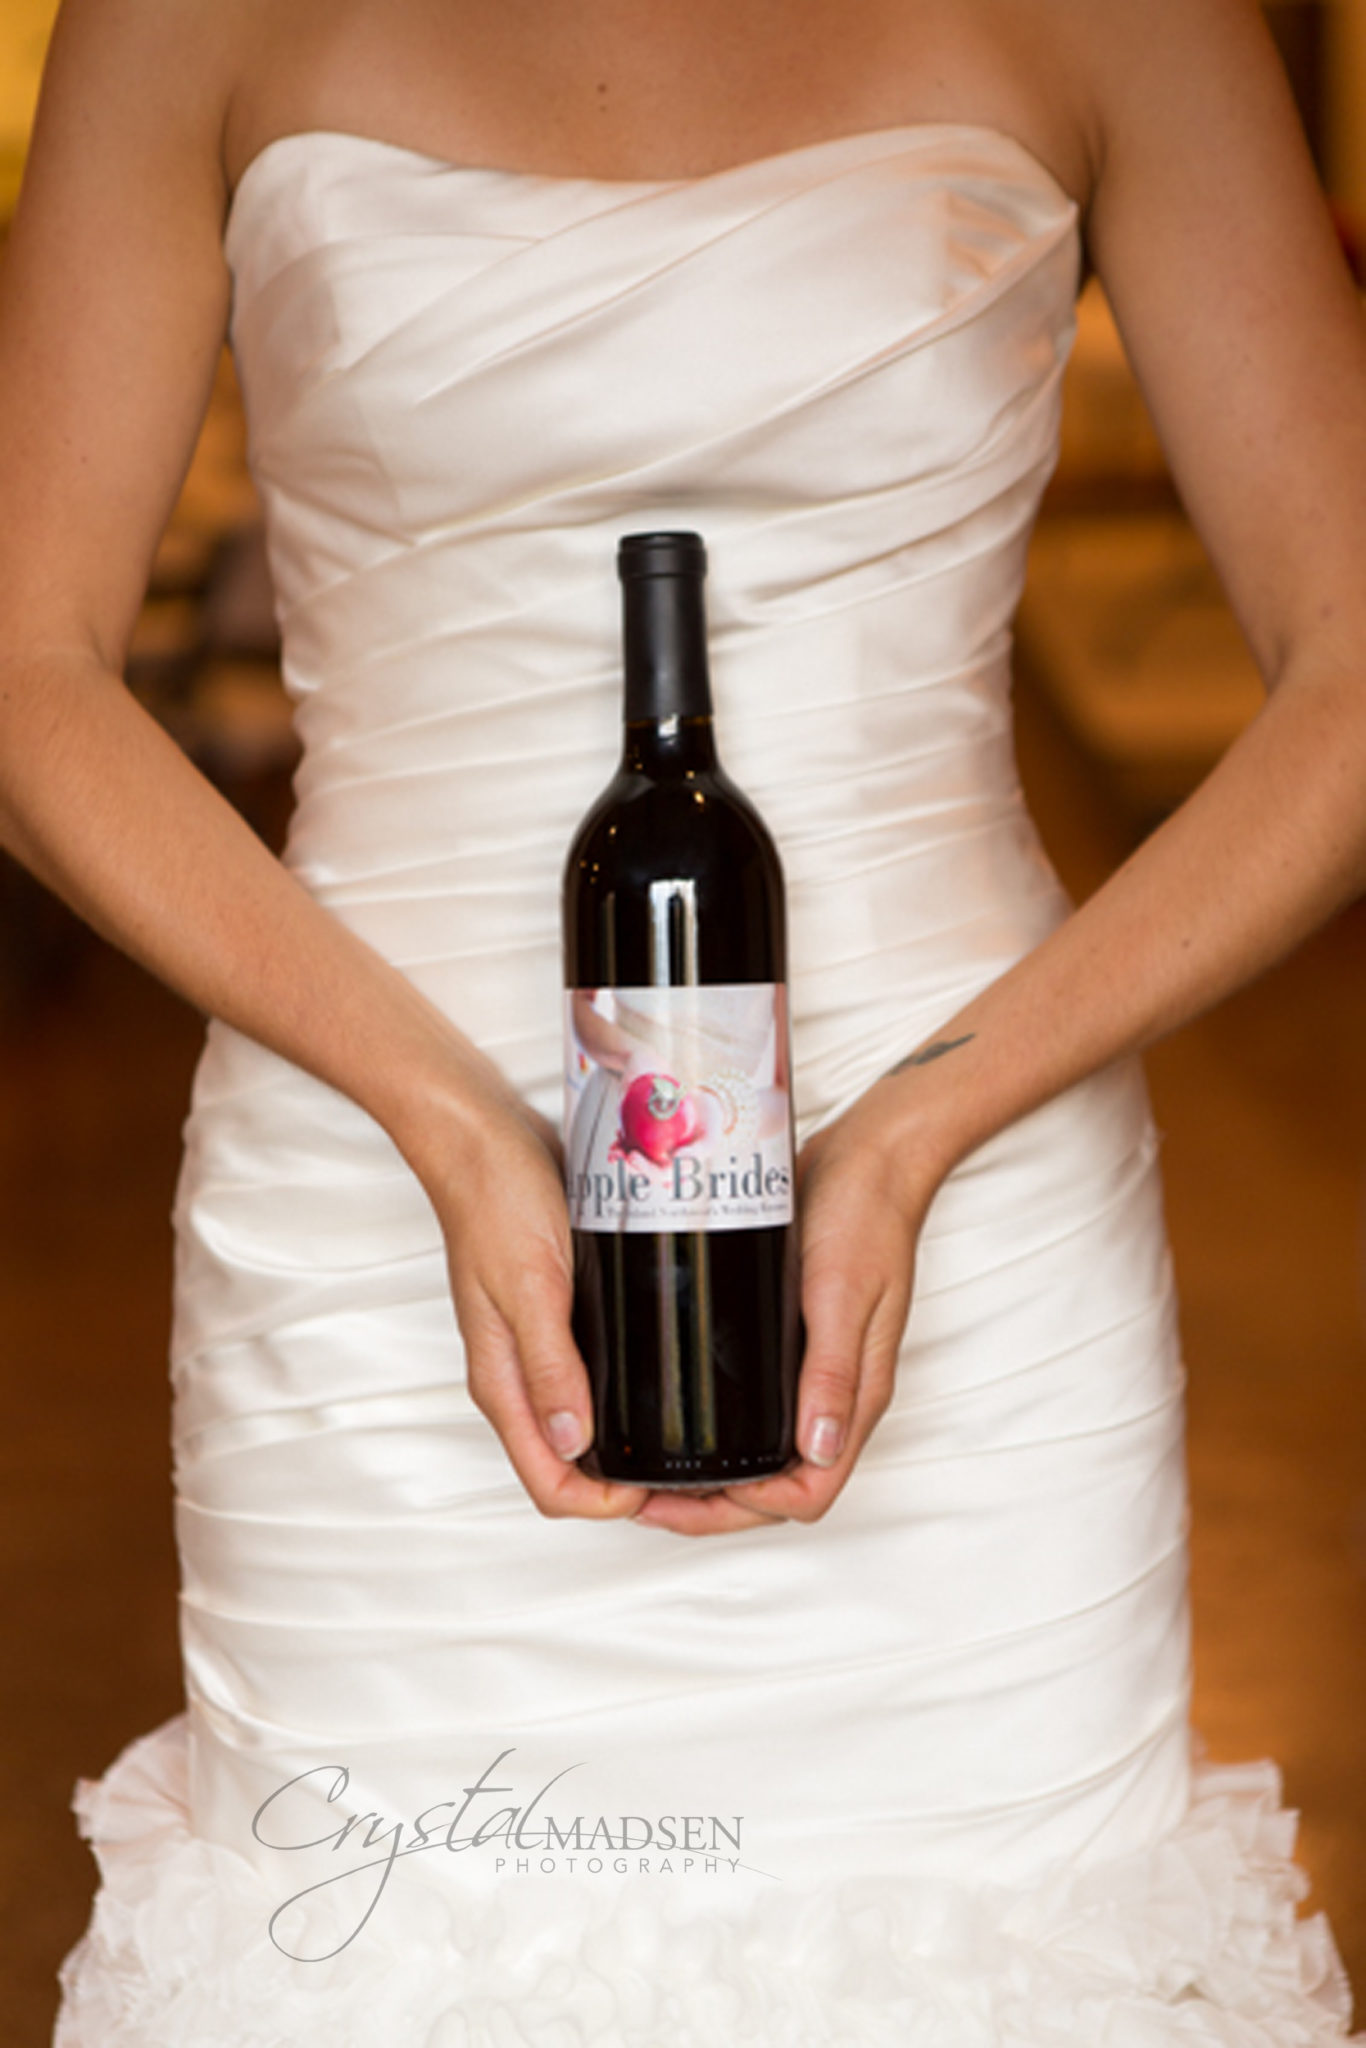 Wine and Brides